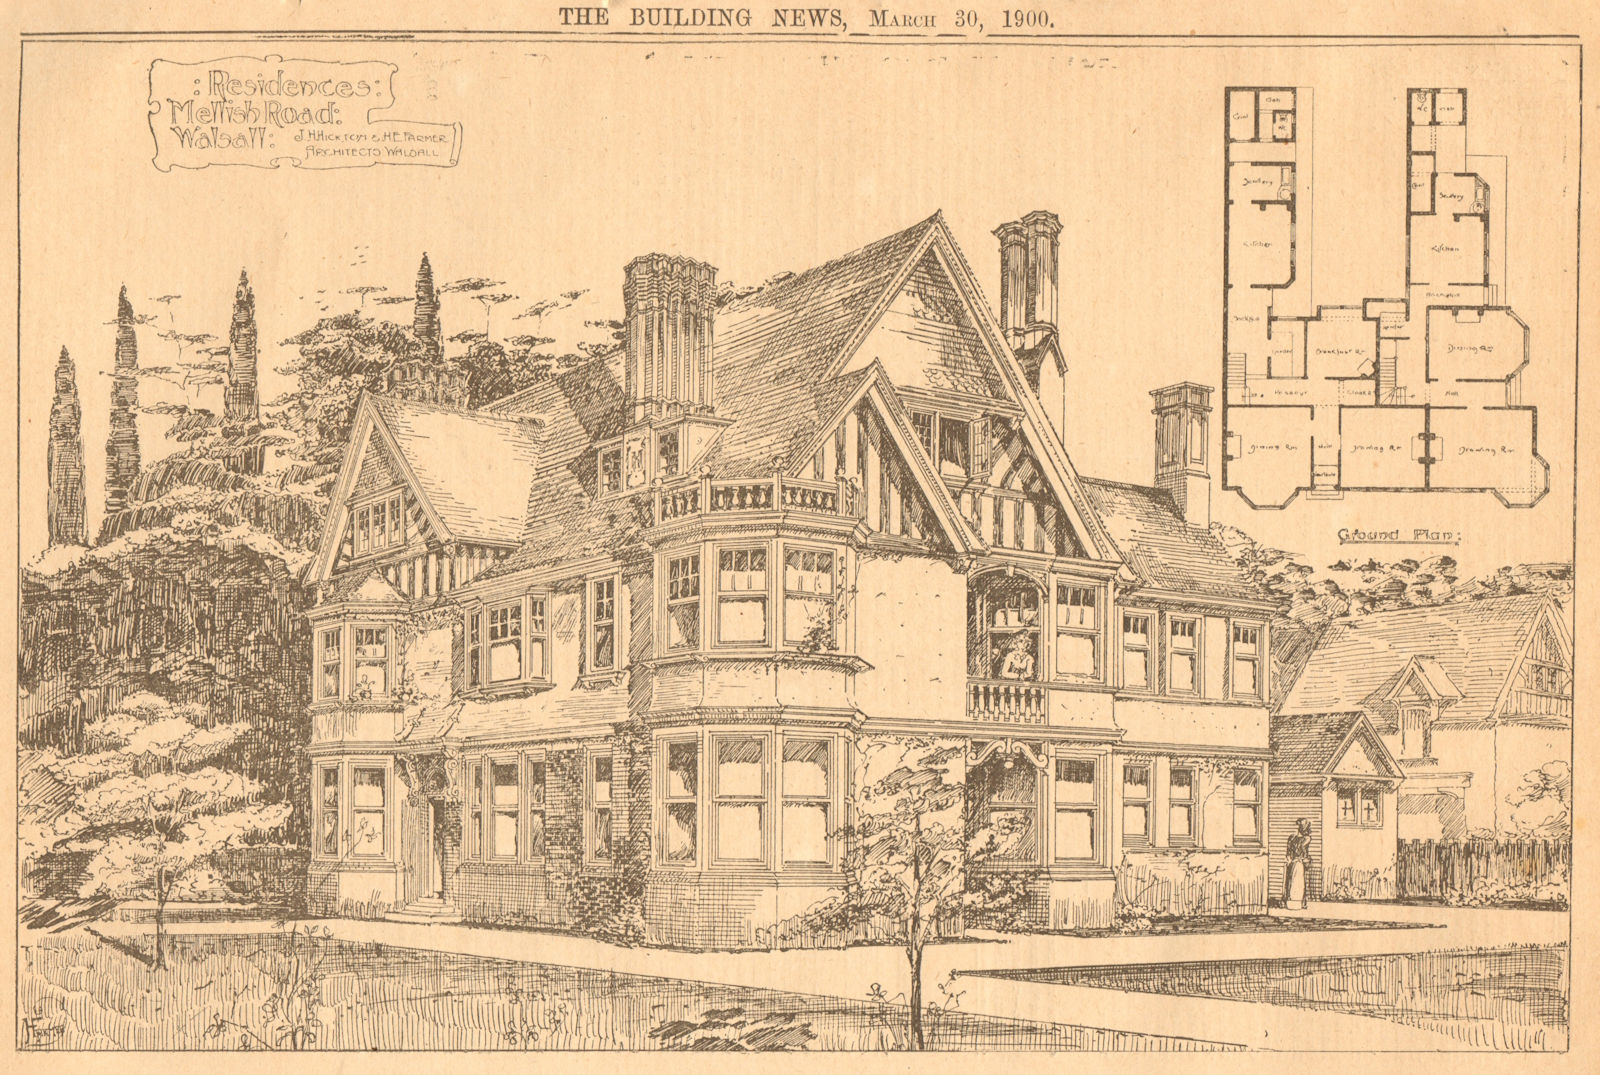 Associate Product Residences: Mellish Road, Walsall, J.H. Hickton & H.E. Farmer Architect 1900